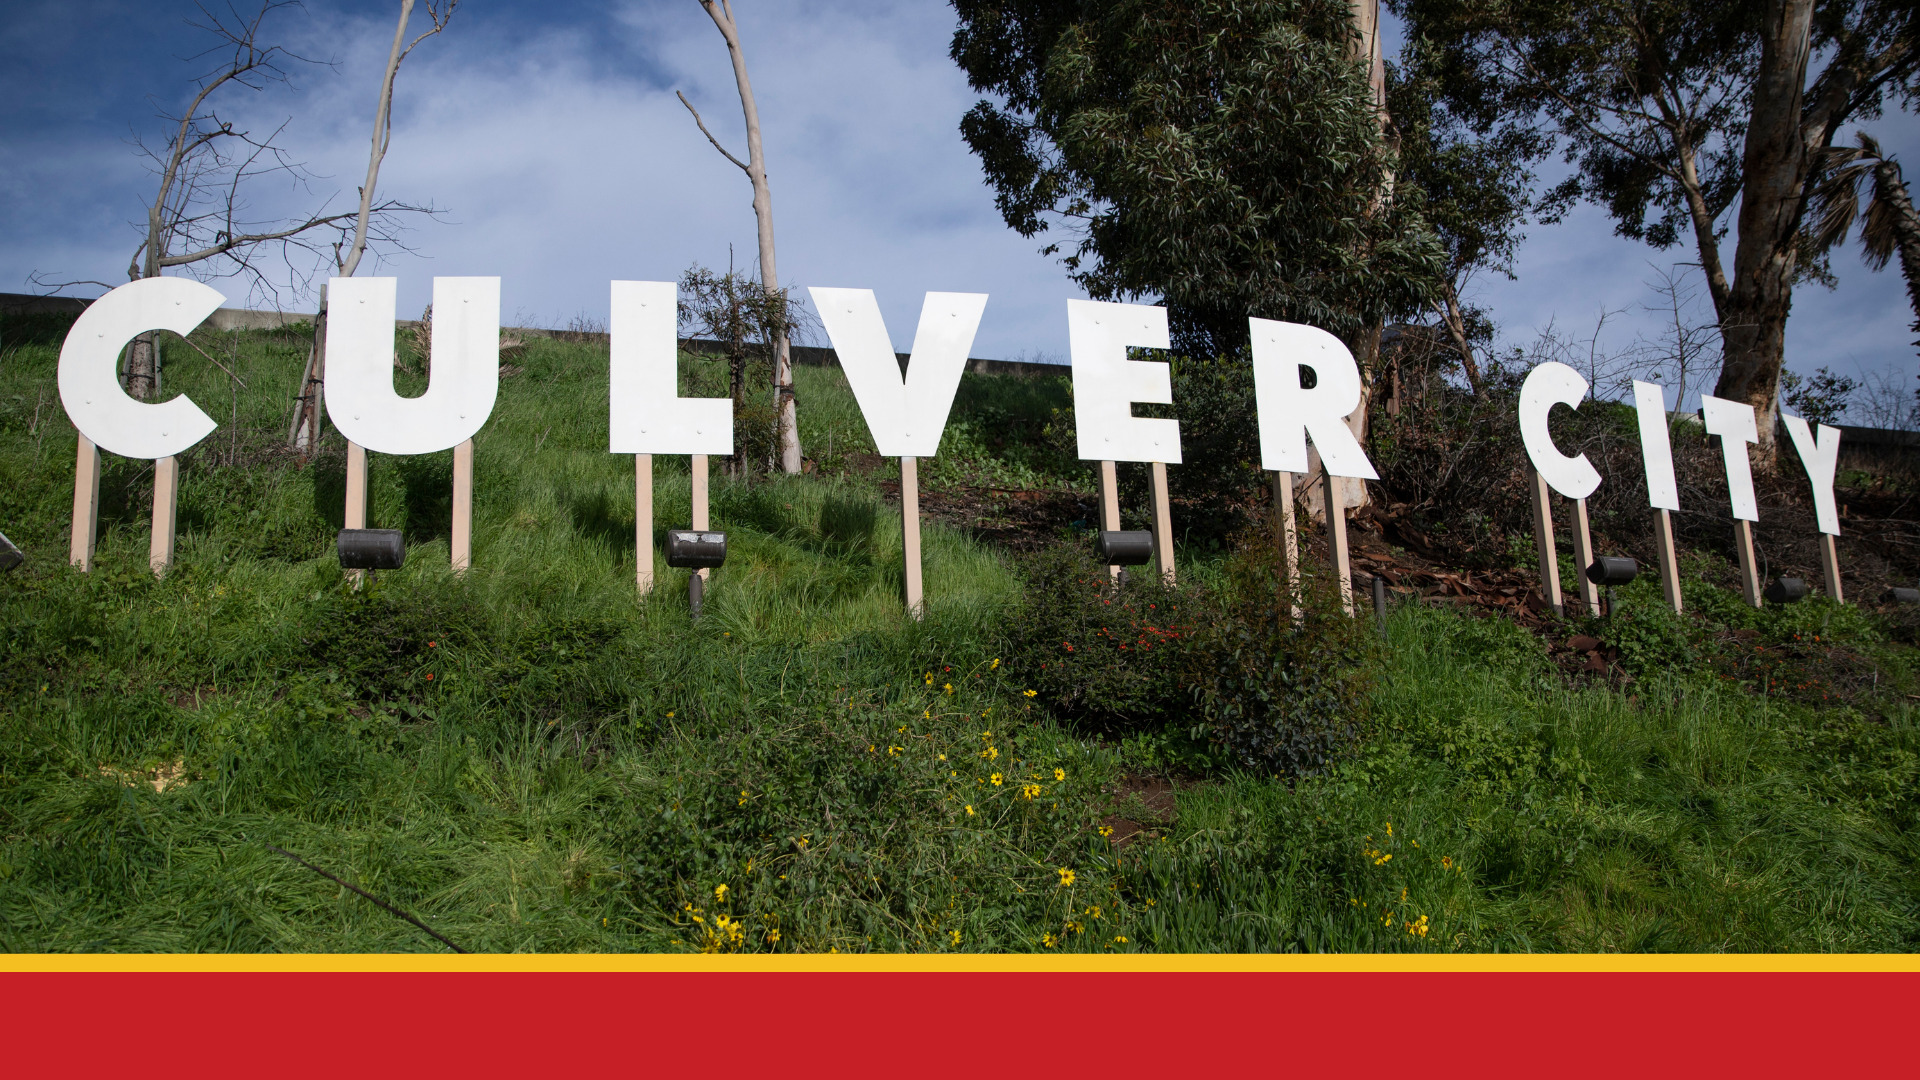 Culver City sign on grassy hill